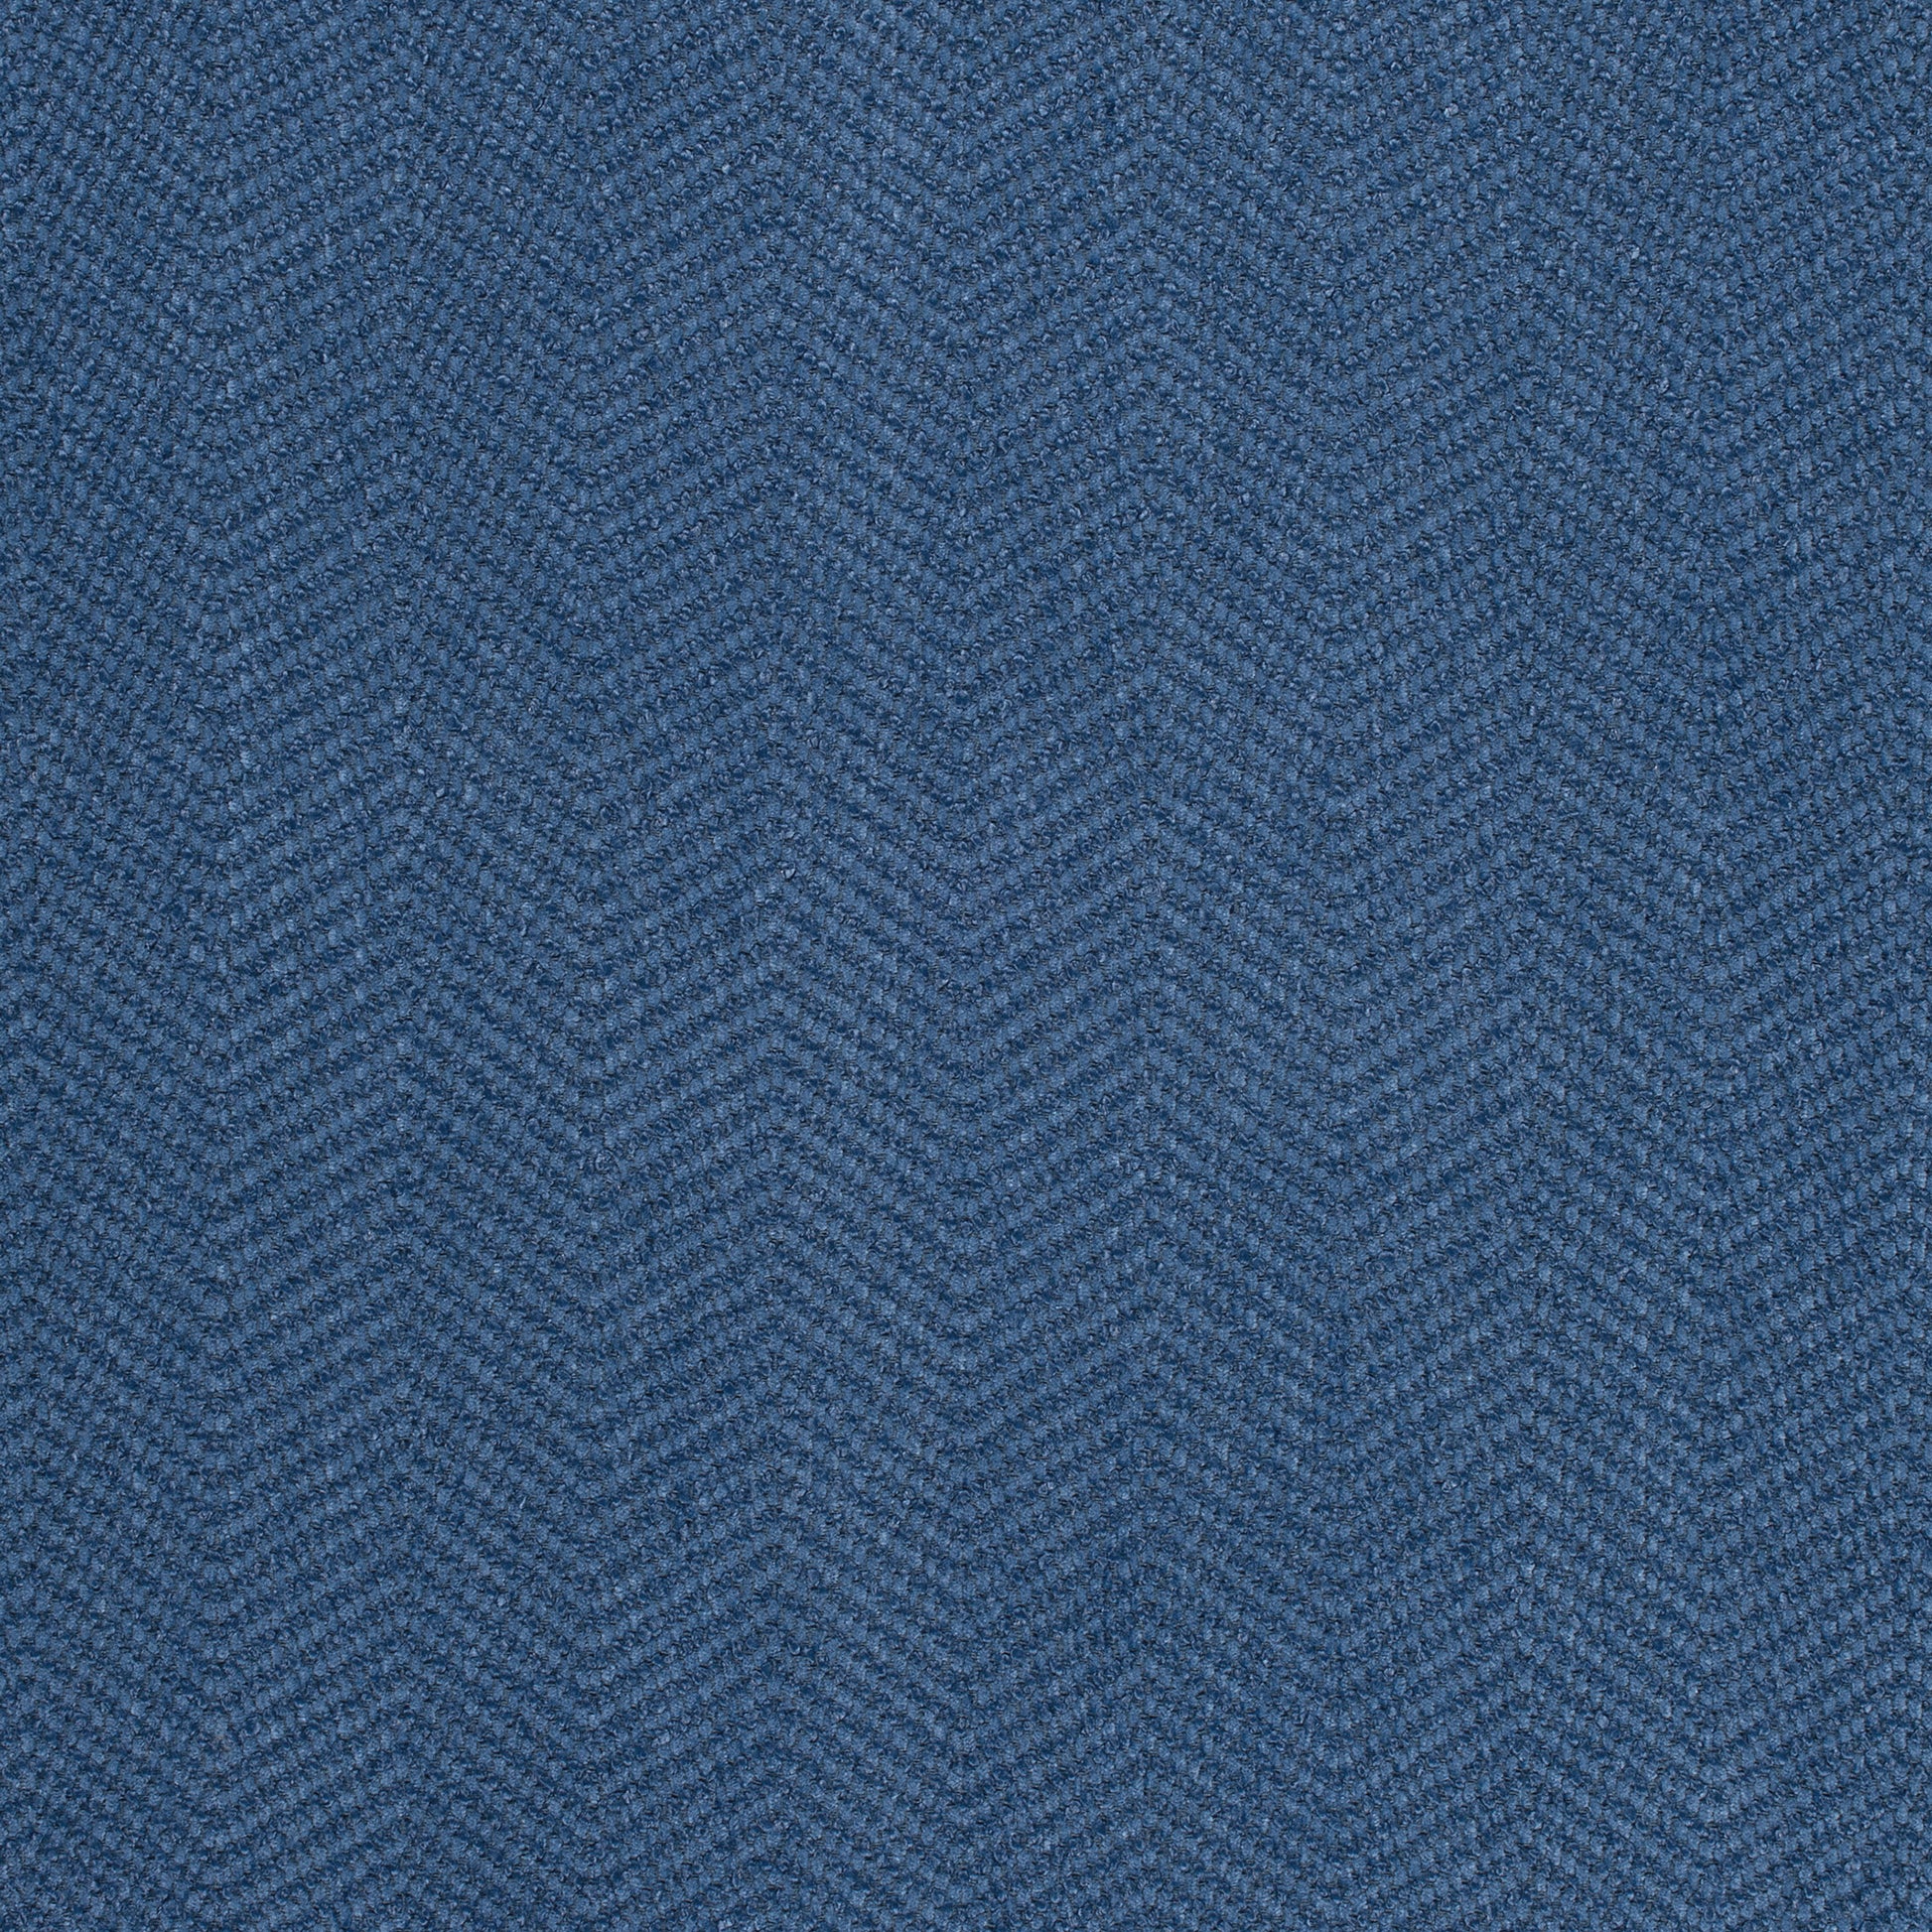 Purchase Thibaut Fabric Pattern# W80629 pattern name Dalton Herringbone color Royal Blue